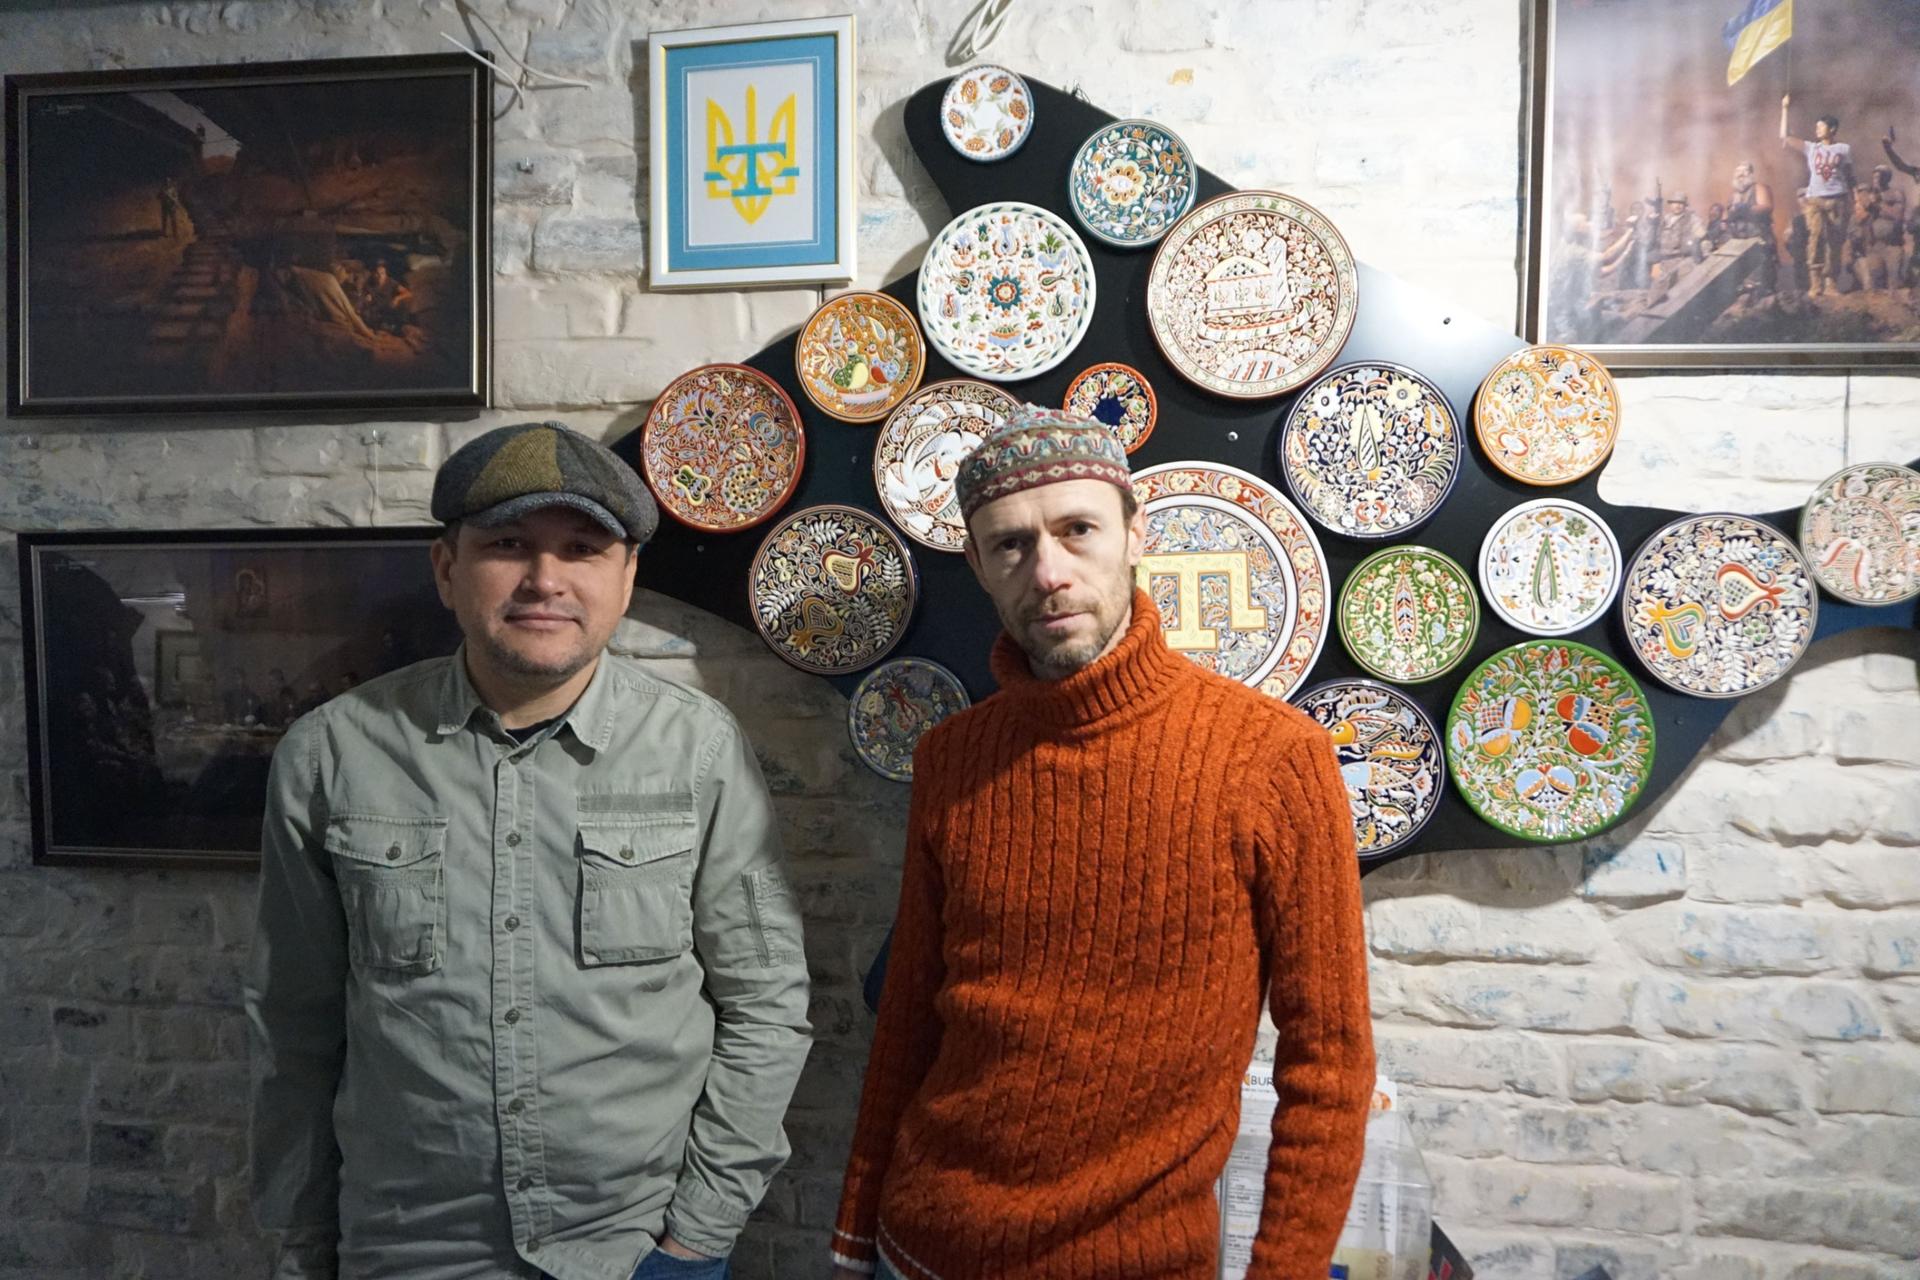 Crimean Tatar artist and activist, Rustem Skibin on the right. Erfan Kudusov, Crimean Tatar activist and restaurant owner on the left. Photo taken at Kudusov's restaurant, in downtown Kyiv.